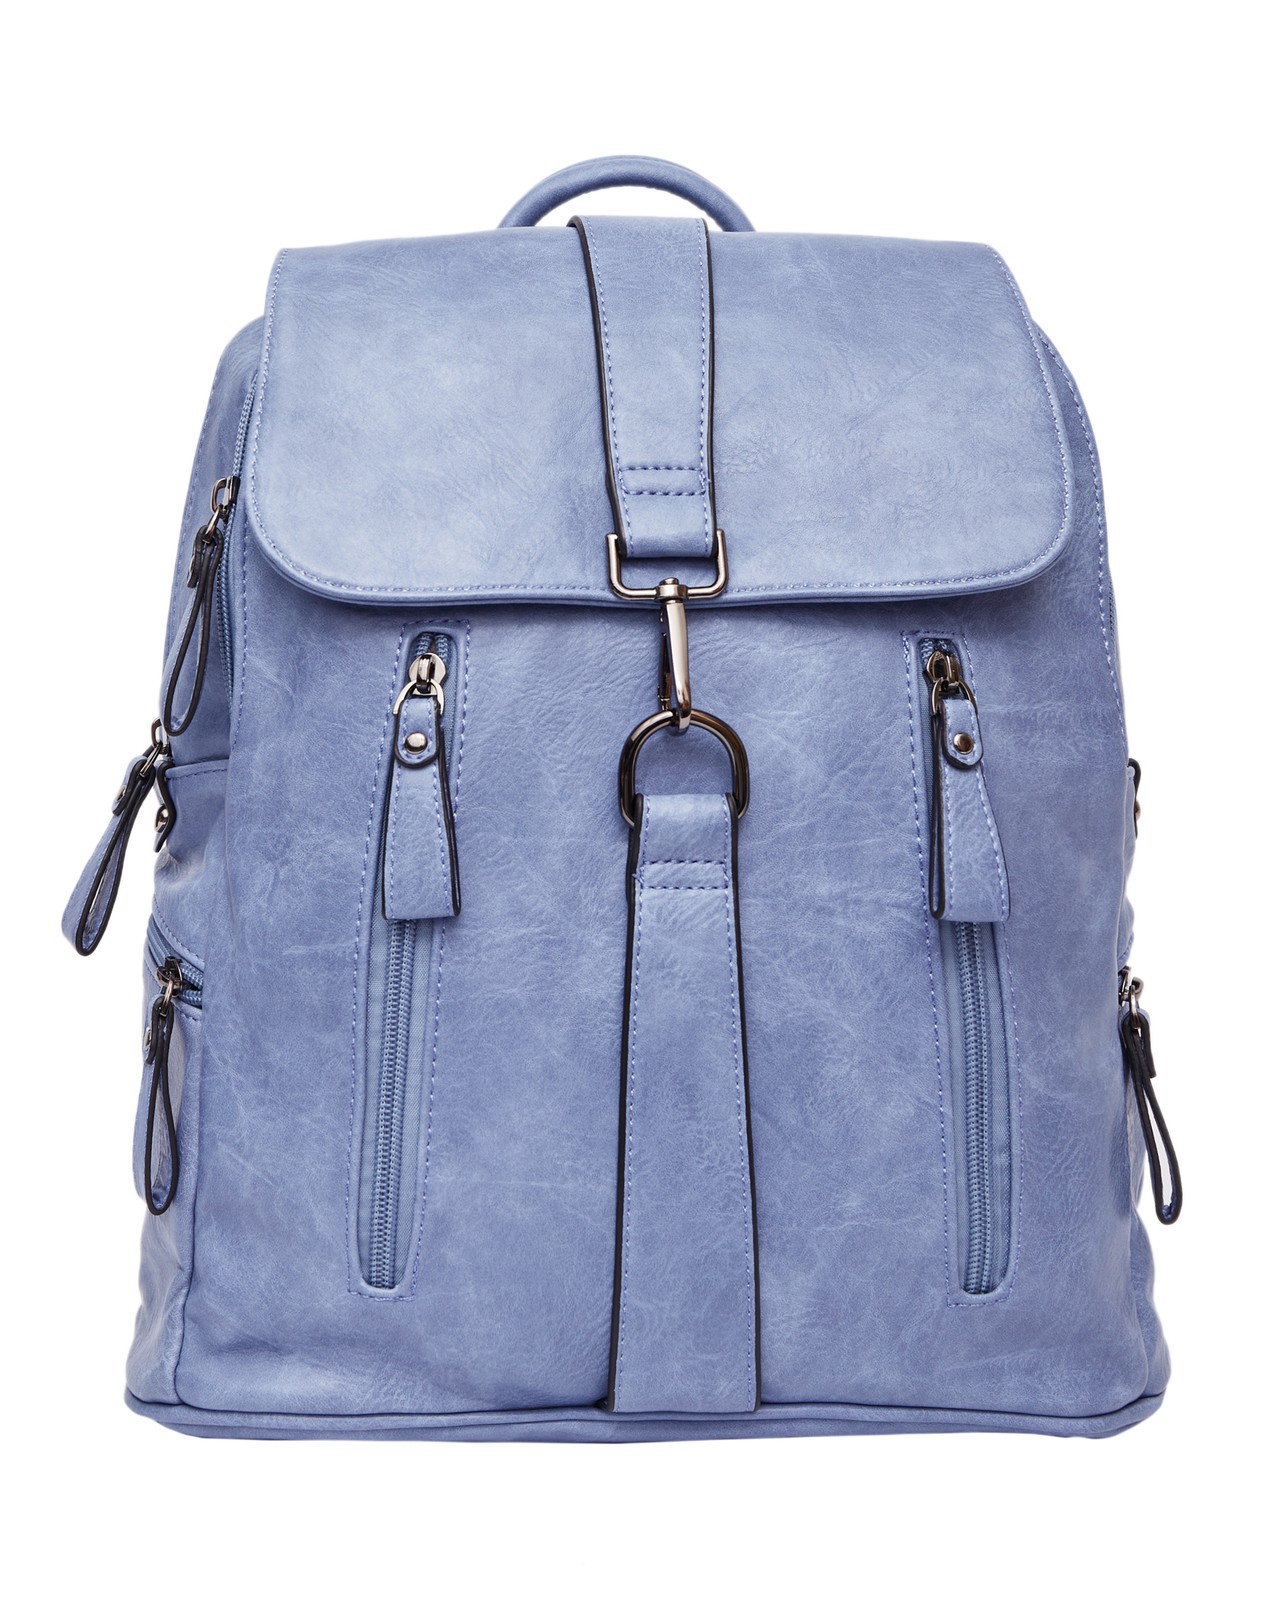 Рюкзак женский BAGS-ART PY1971 голубой, 35х30х10 см